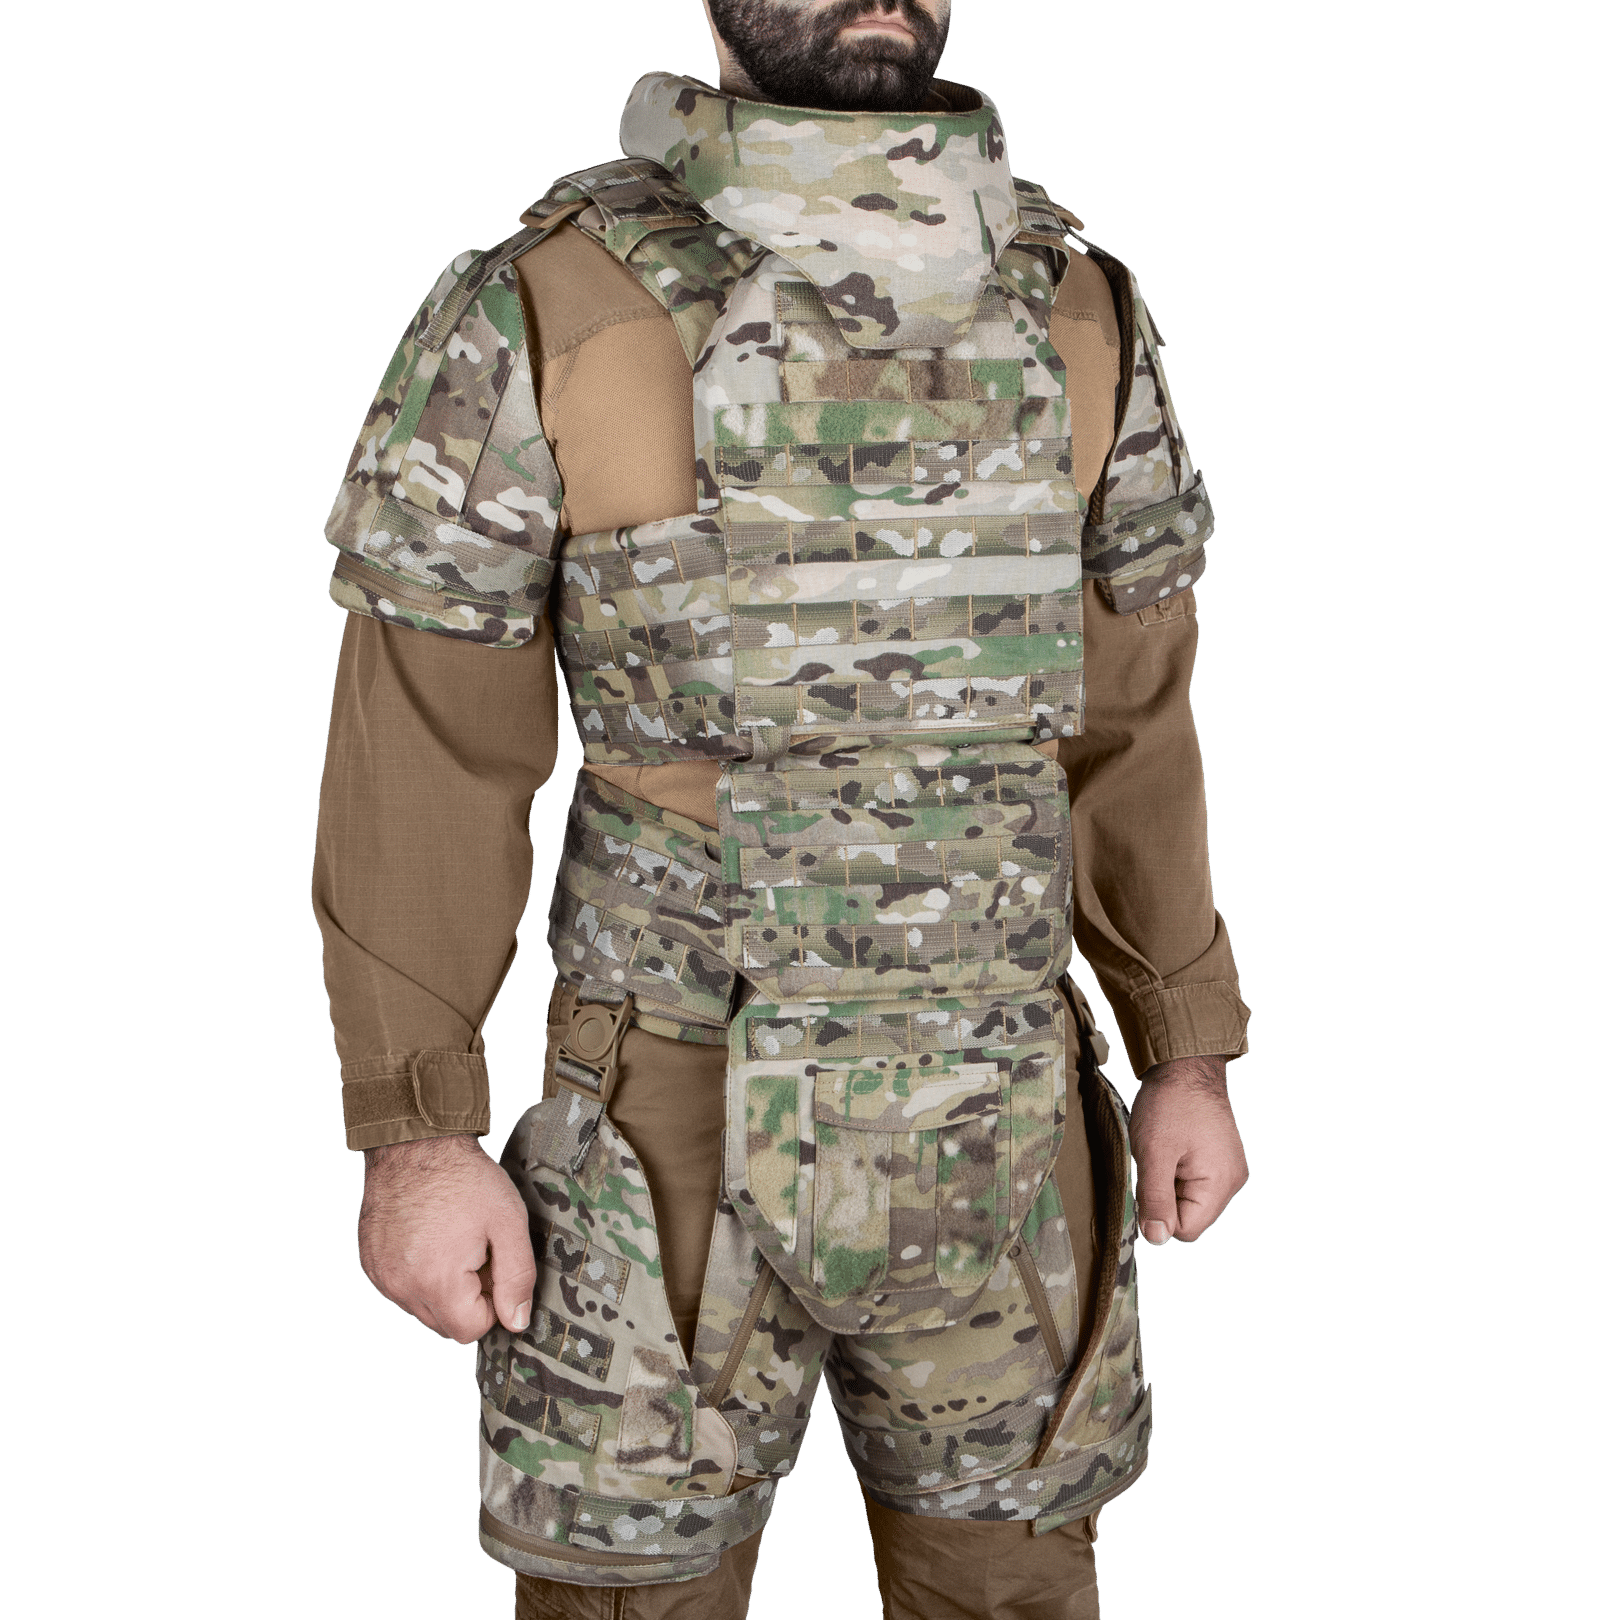 Full Body Bulletproof Suit